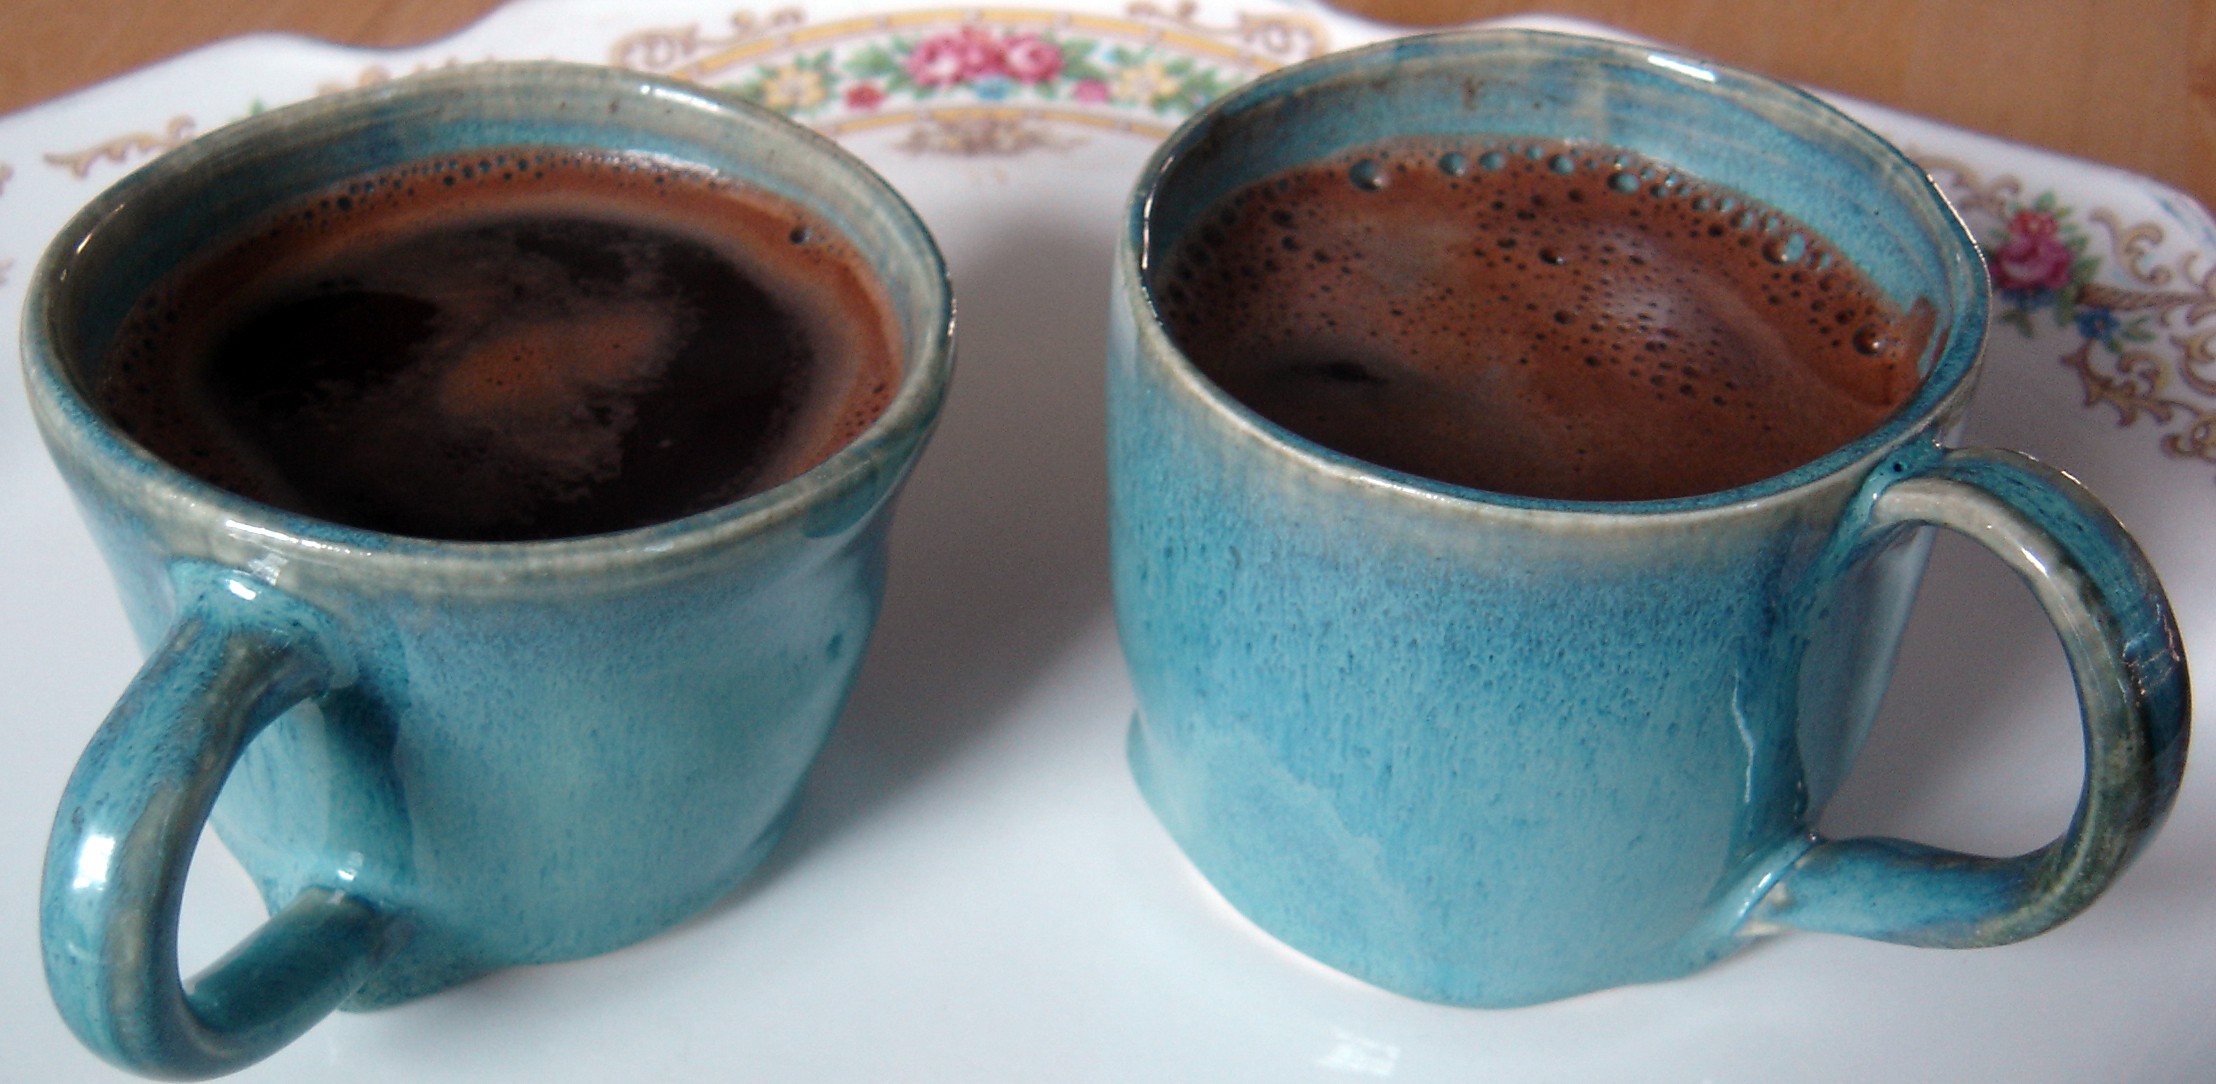 Turkish Coffee in 2 cups